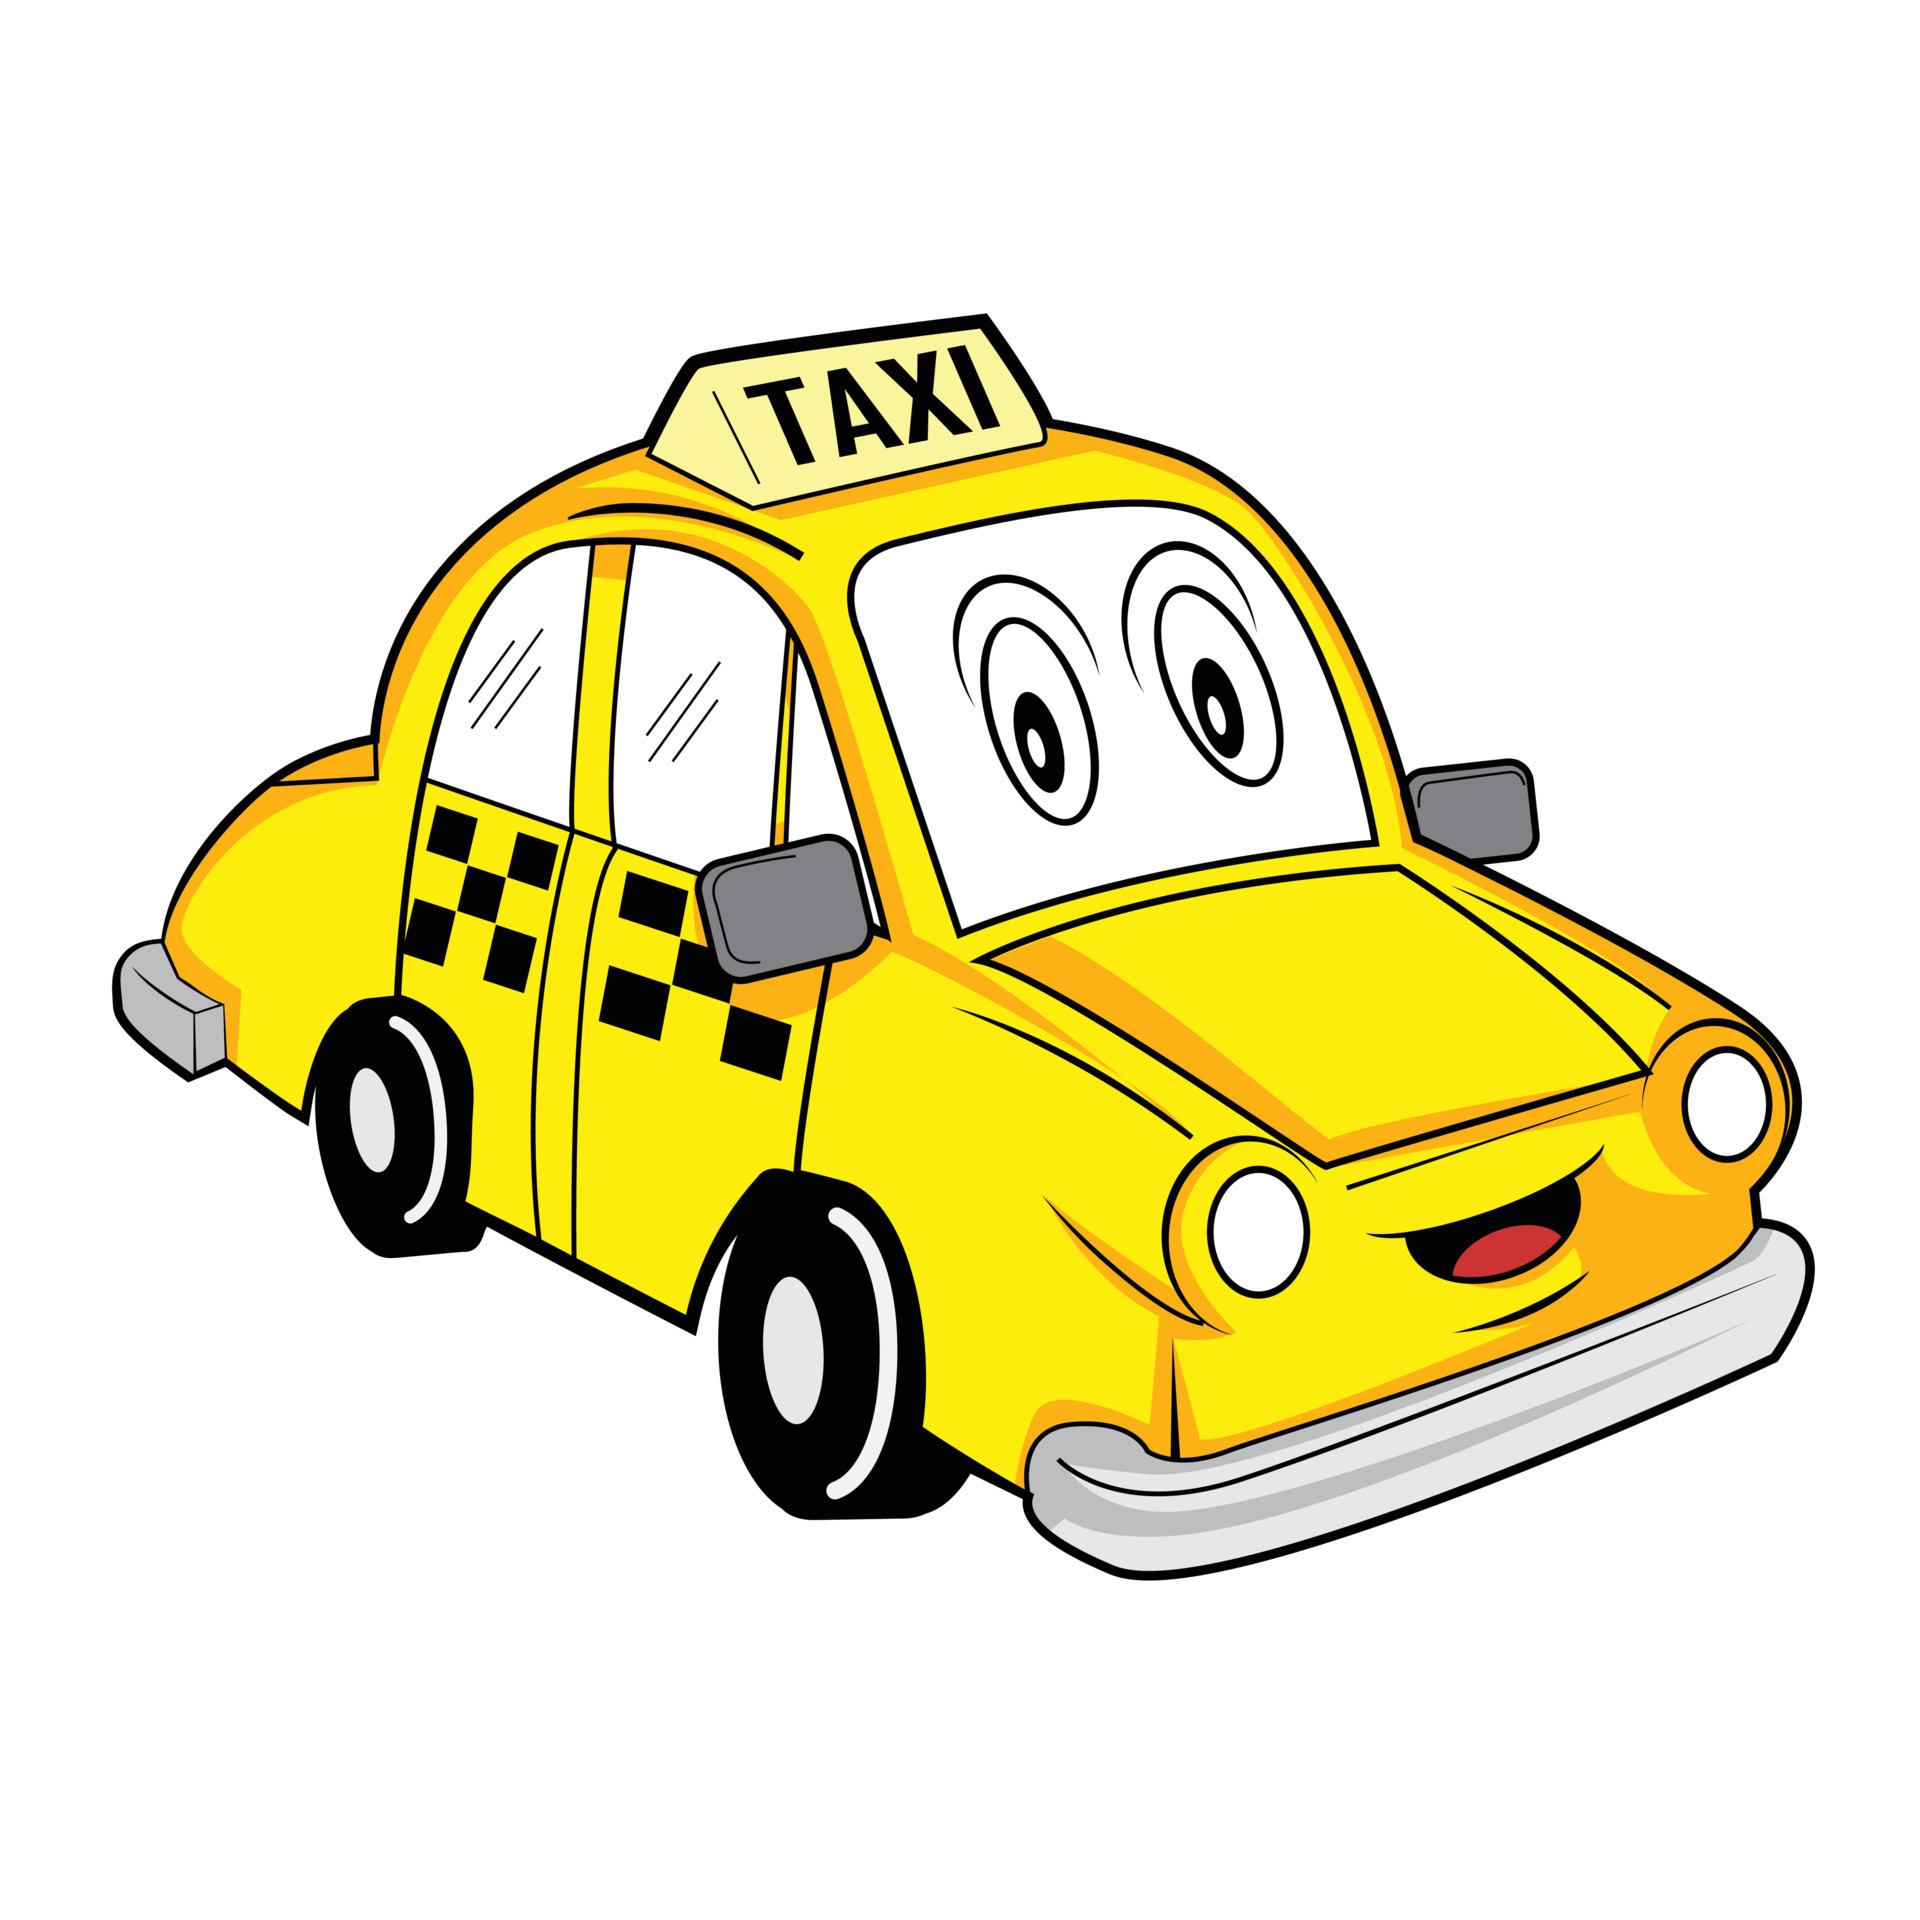  Taxi Etten-leur  thumbnail